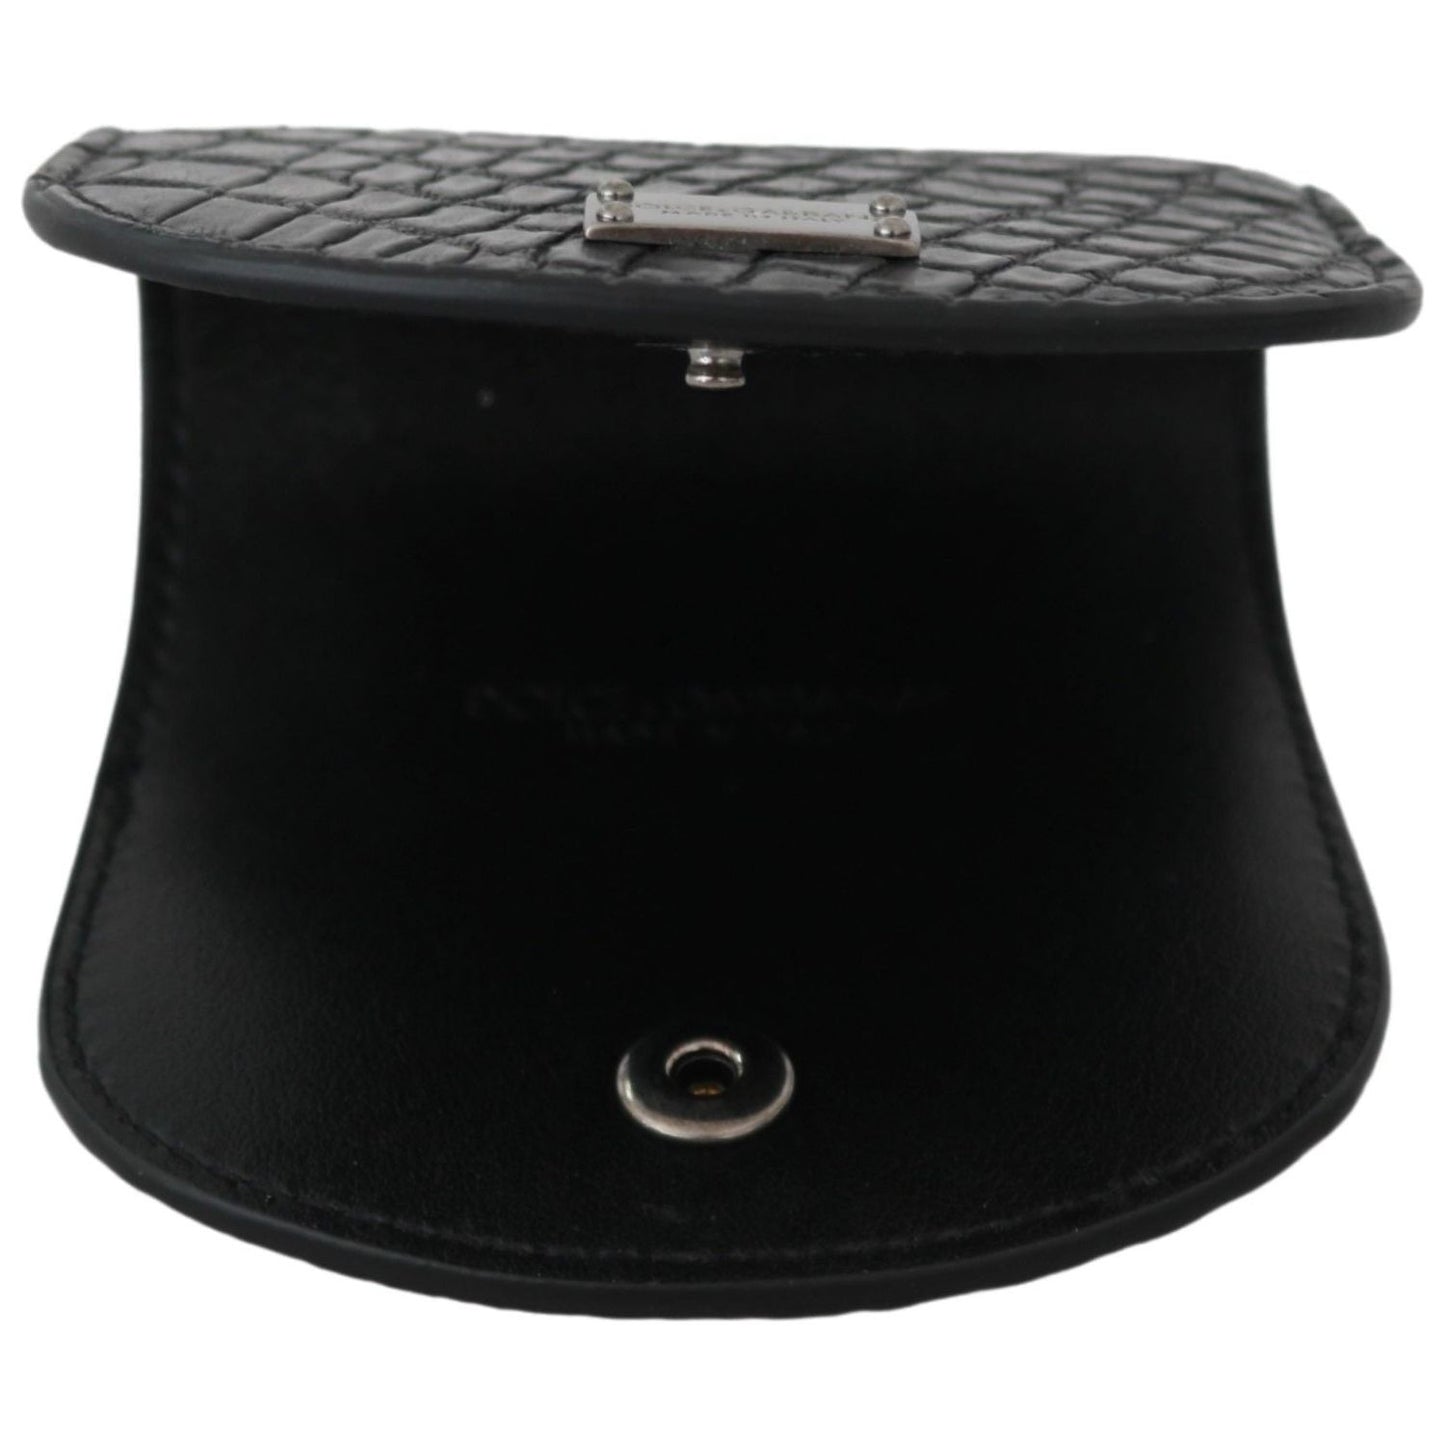 Dolce & Gabbana Sleek Black Leather Coin Case Wallet black-exotic-skin-pocket-condom-case-holder Condom Case IMG_0233-402a91b6-d29.jpg